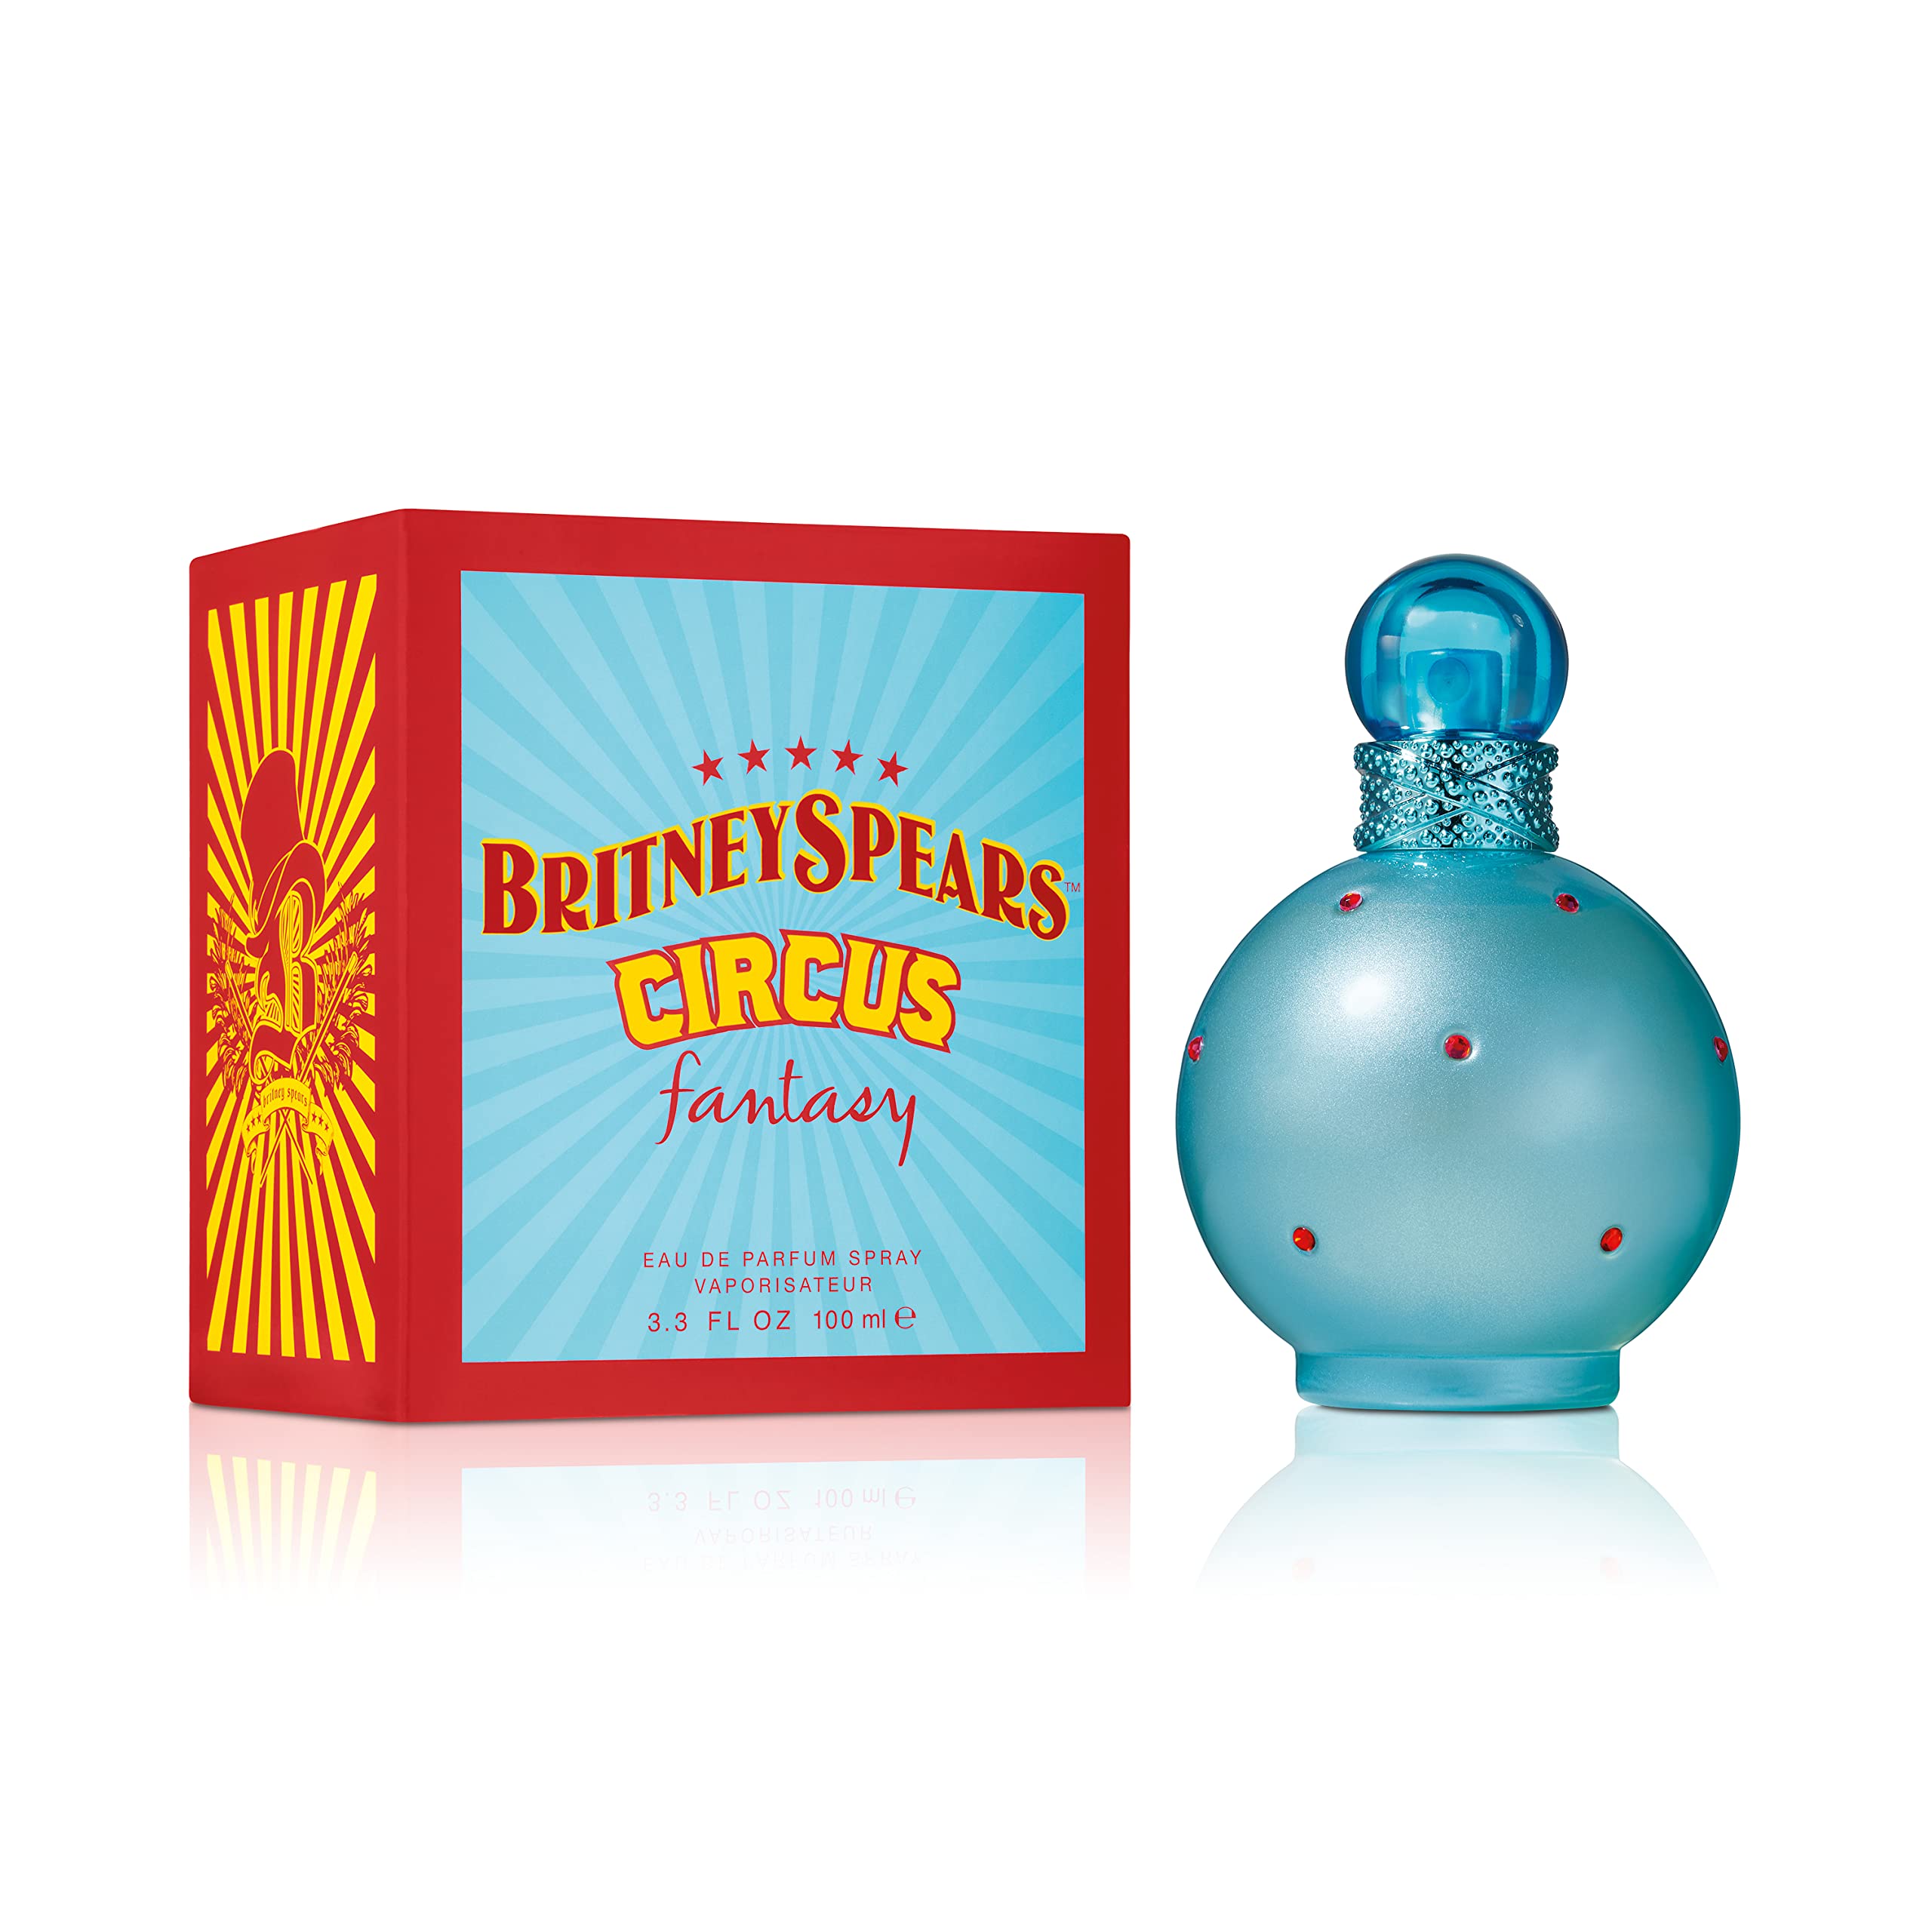 Britney Spears Fantasy Circus EDP | My Perfume Shop Australia